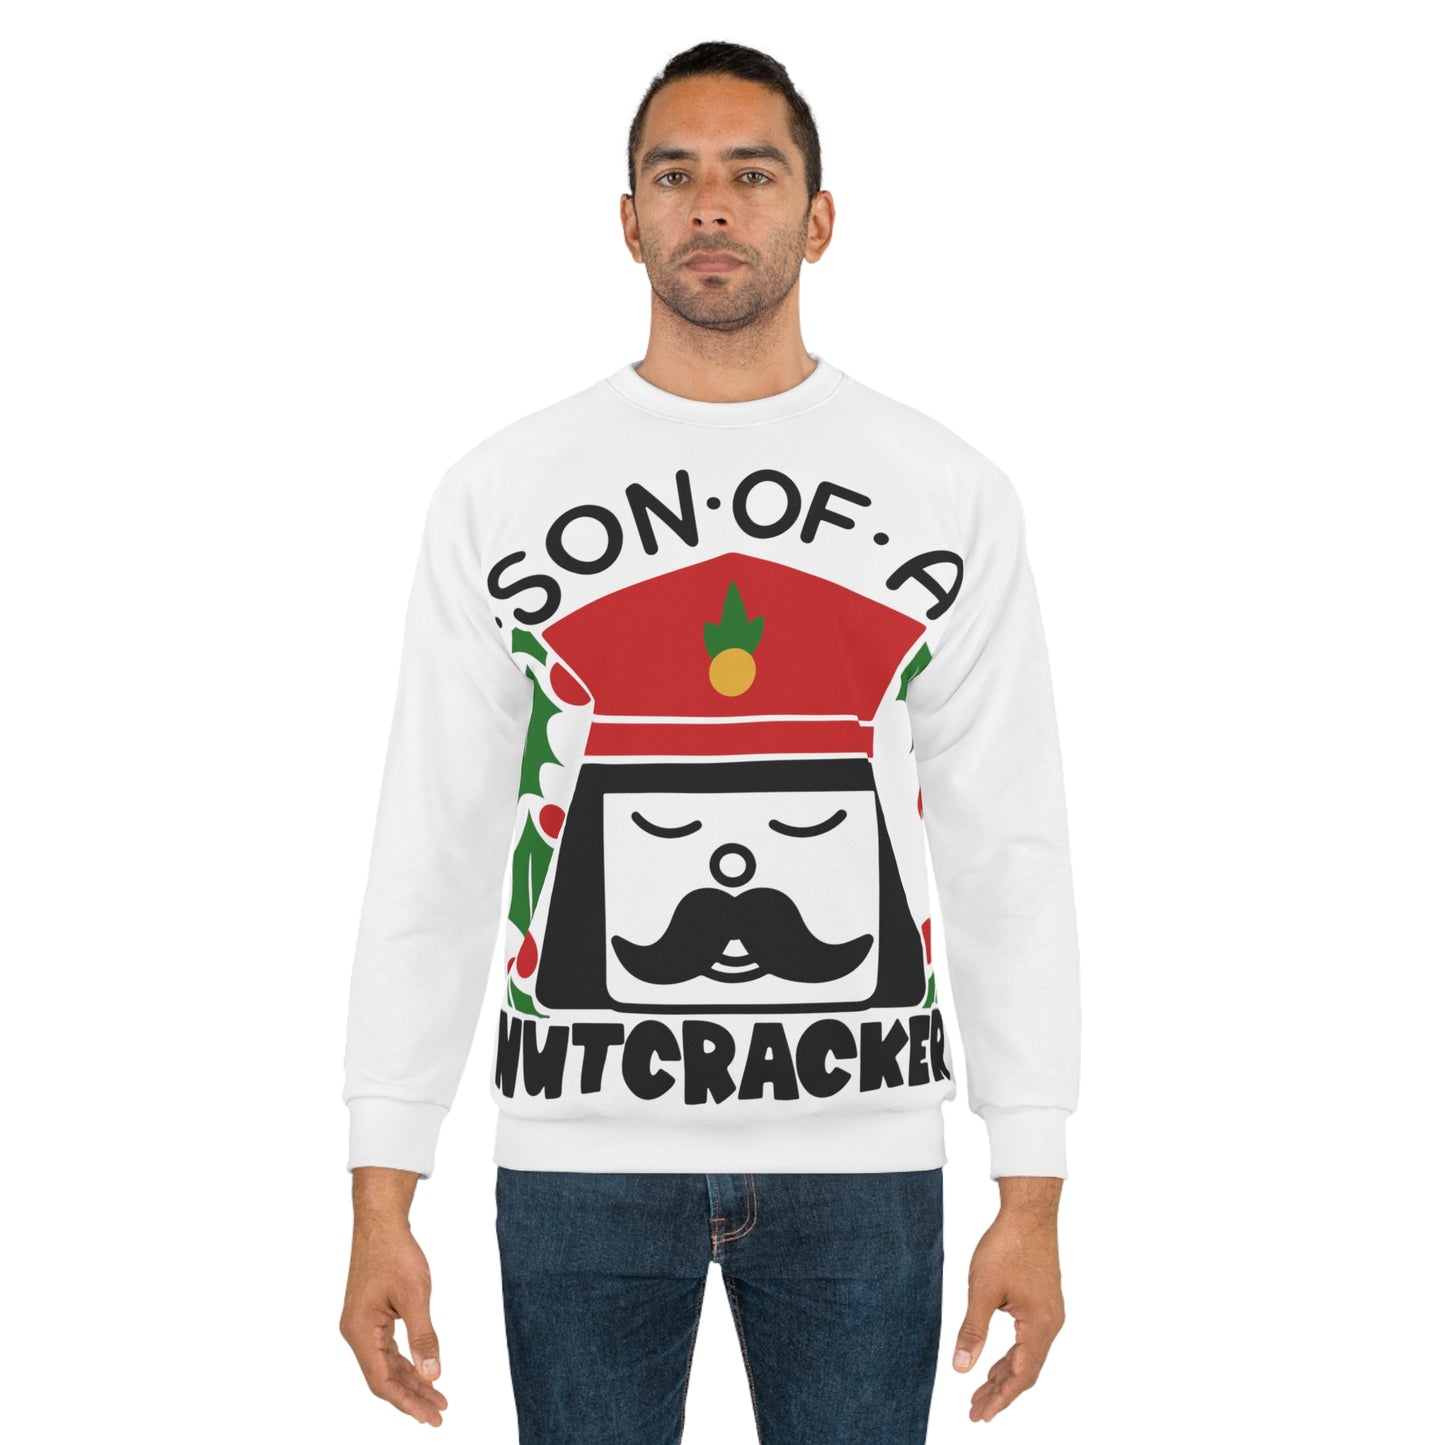 Son Of A Nutcracker Unisex Sweatshirt, Nutcracker Holiday Shirt, Ugly Sweatshirt, Elf Christmas Shirt, Xmas Tee, Ugly Christmas Tee